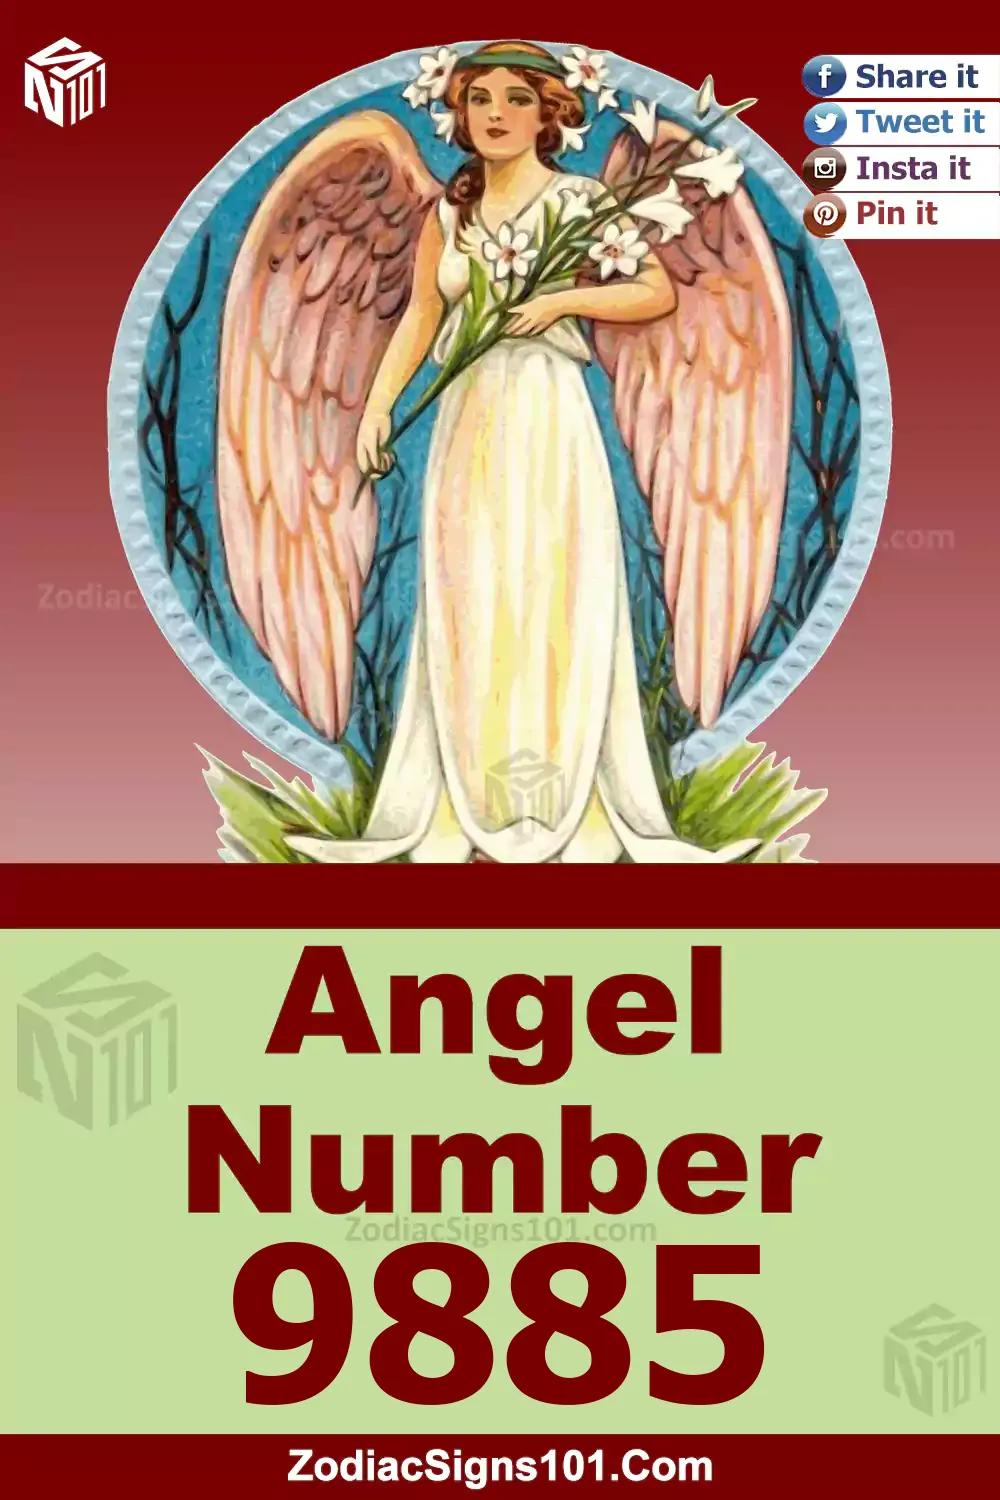 9885-Angel-Number-Meaning.jpg